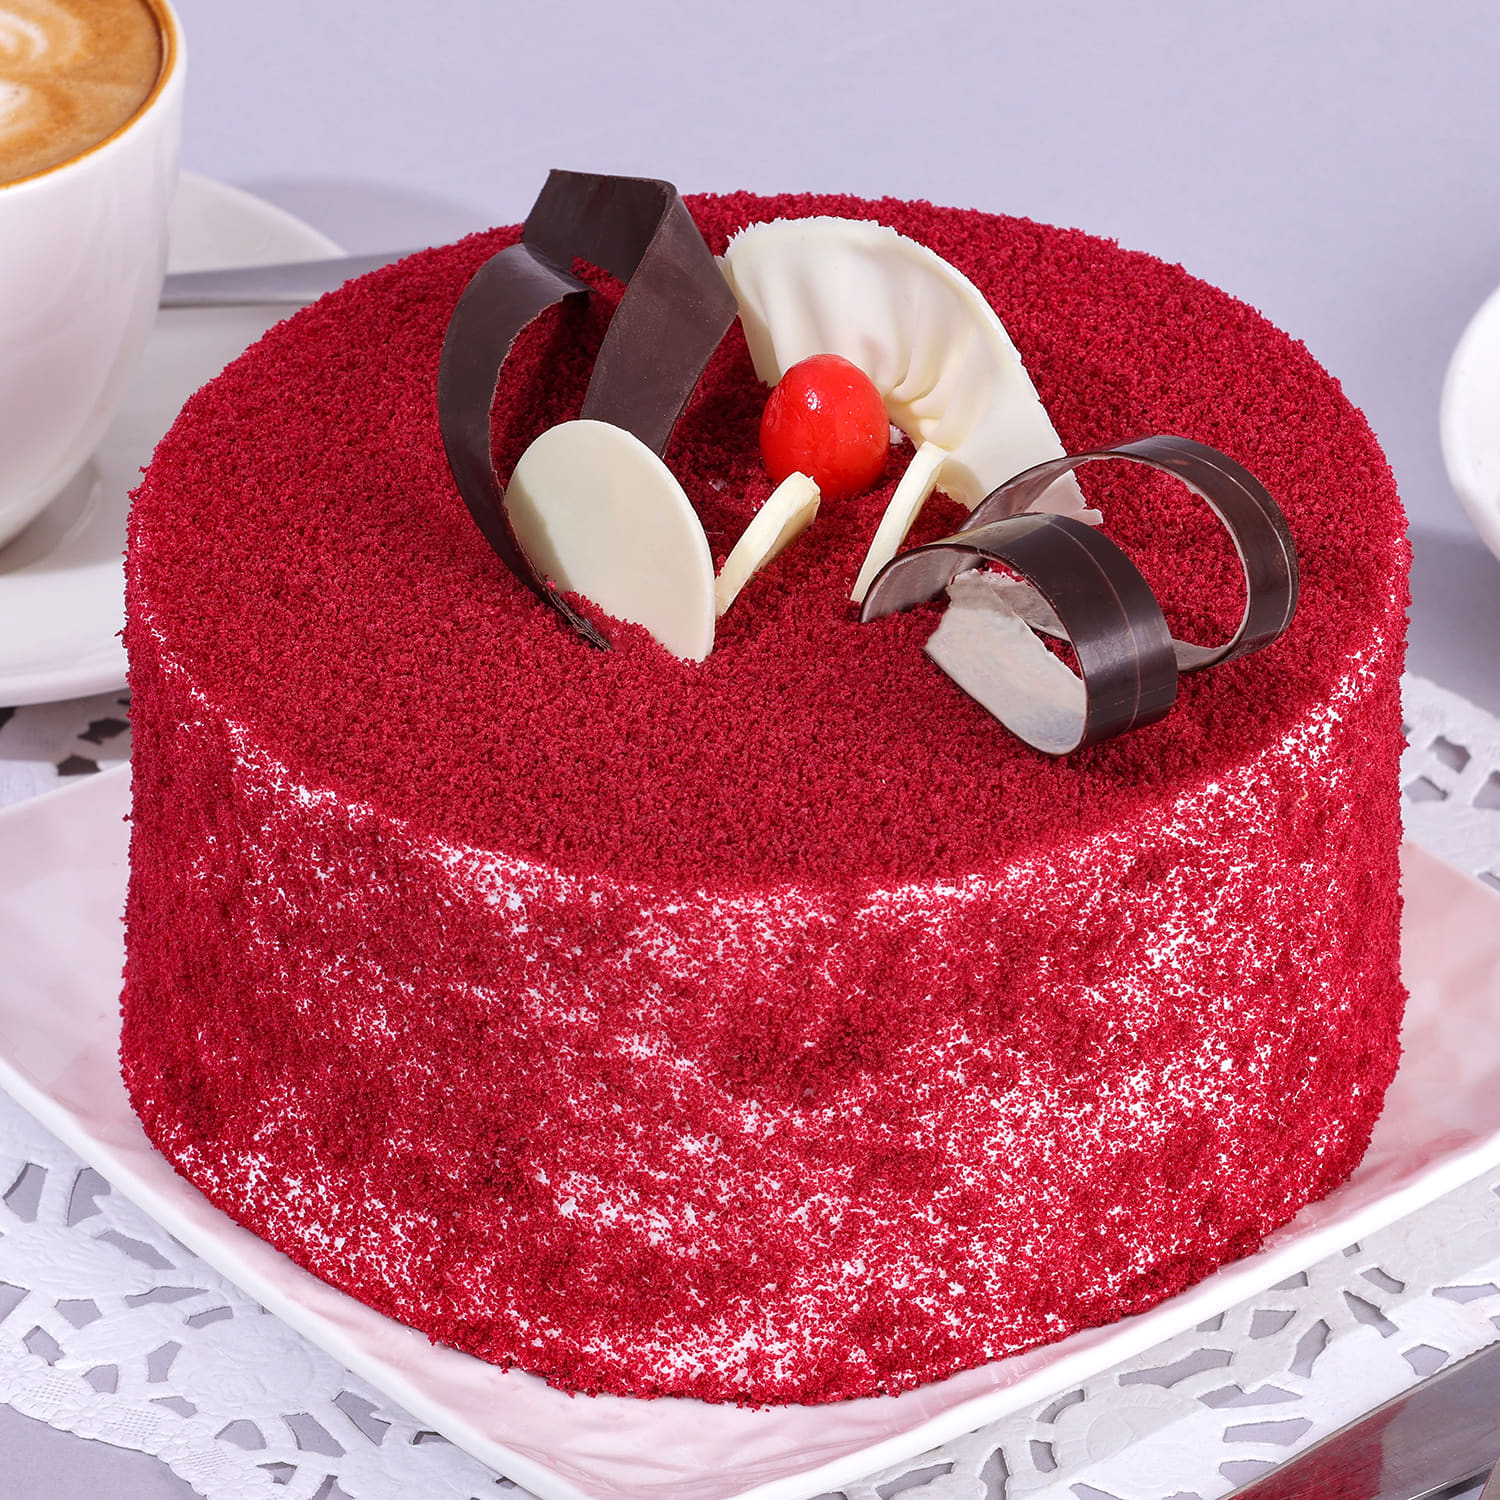 E-voucher] Eat Cake Today - Red Velvet Cake Slice (Klang Valley only) |  Lazada